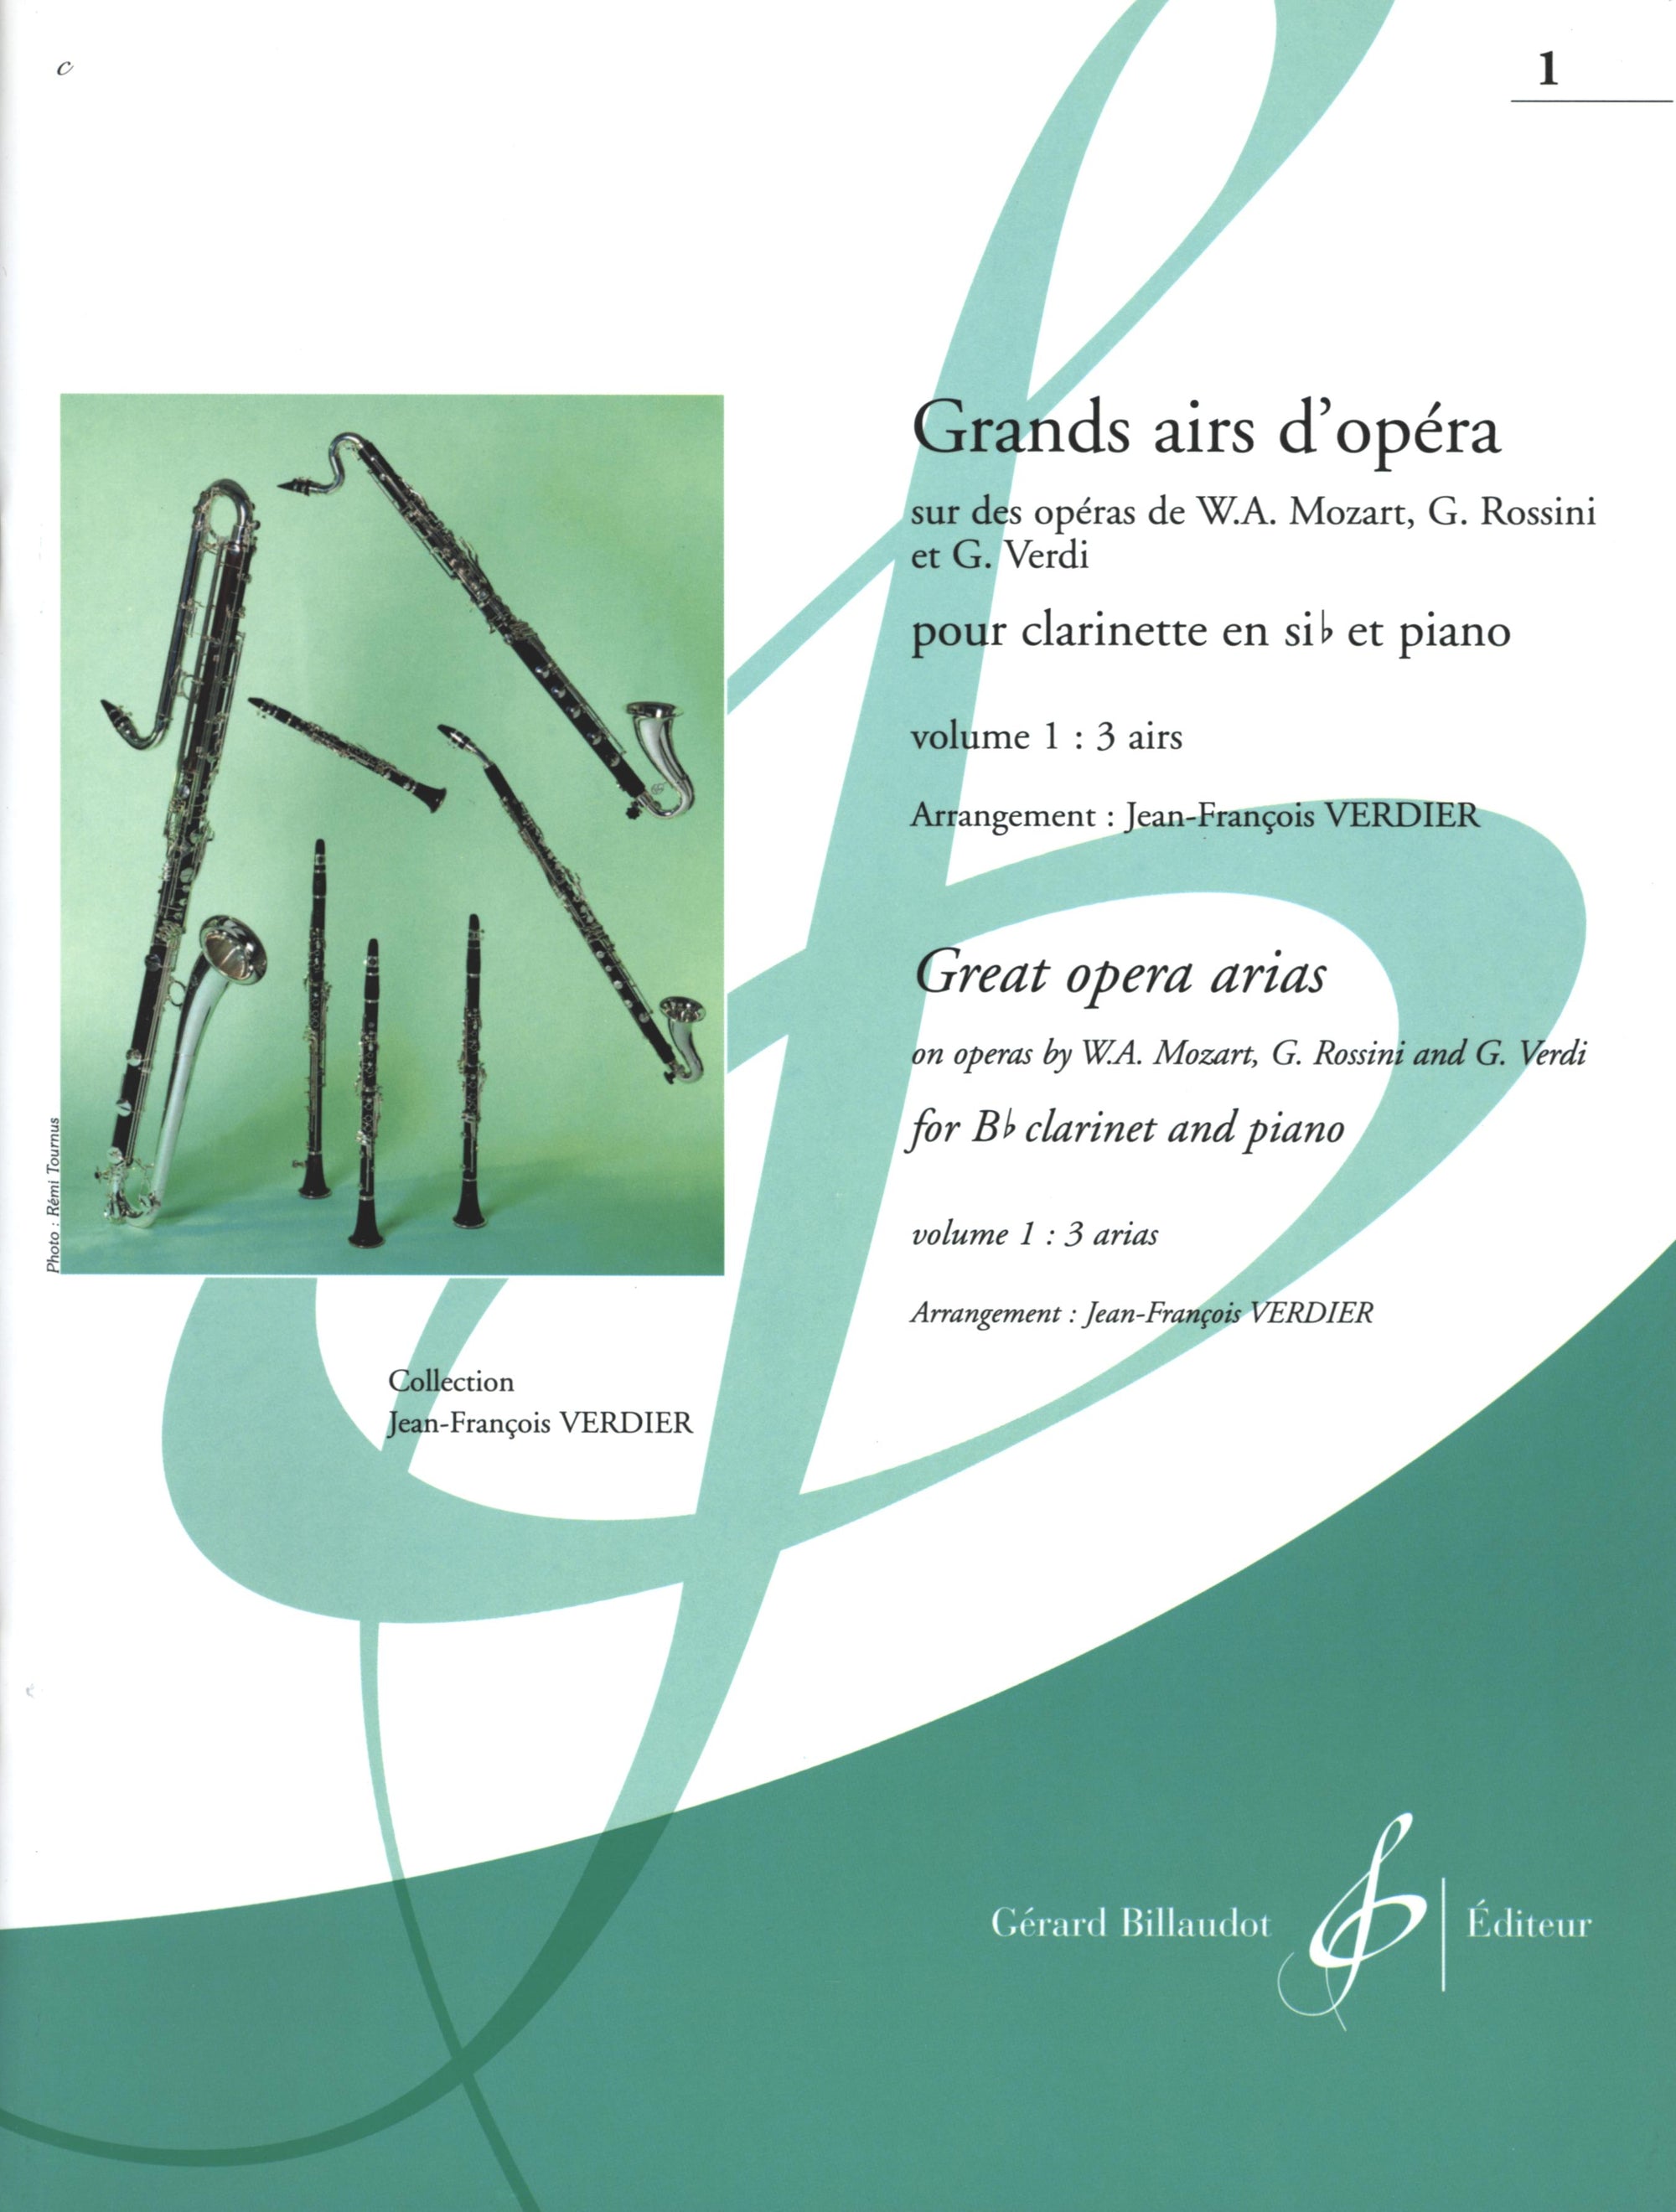 Great Opera Arias for Clarinet - Volume 1